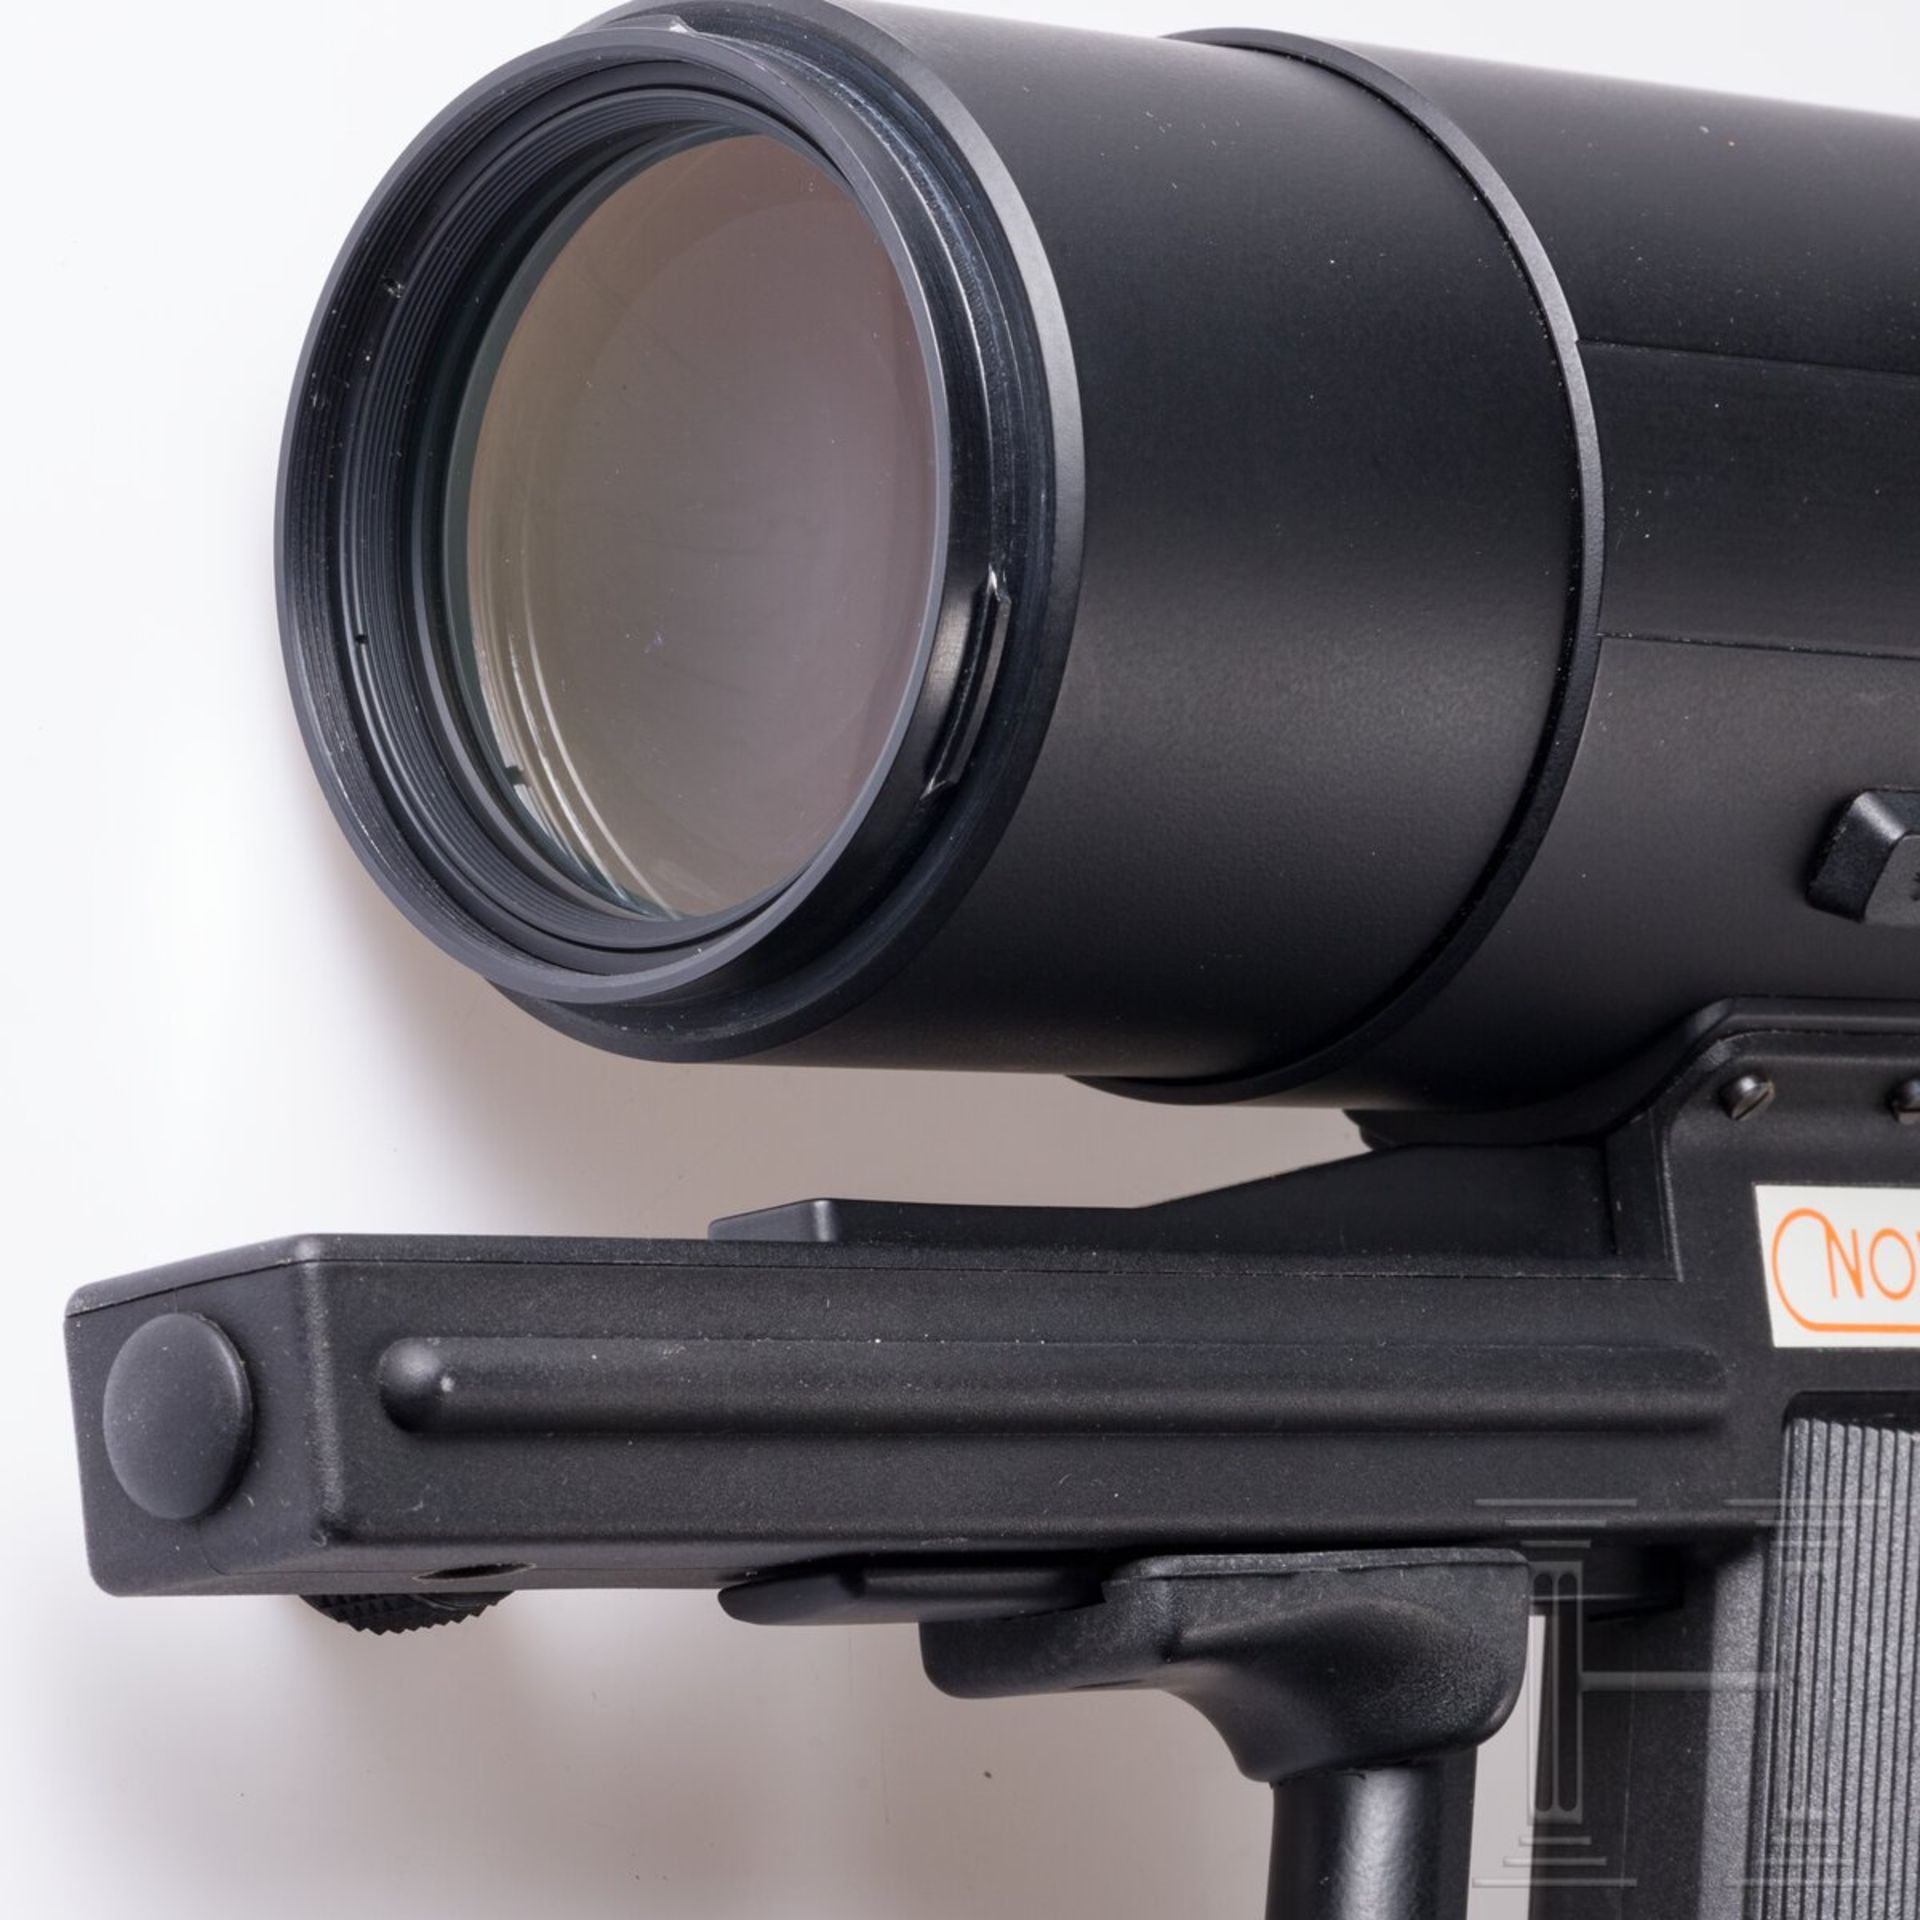 Novoflex-Schnellschuss-Objektiv 3,8 - 5,5/60-300 mm "Follow Focus Lenses" - Image 5 of 6